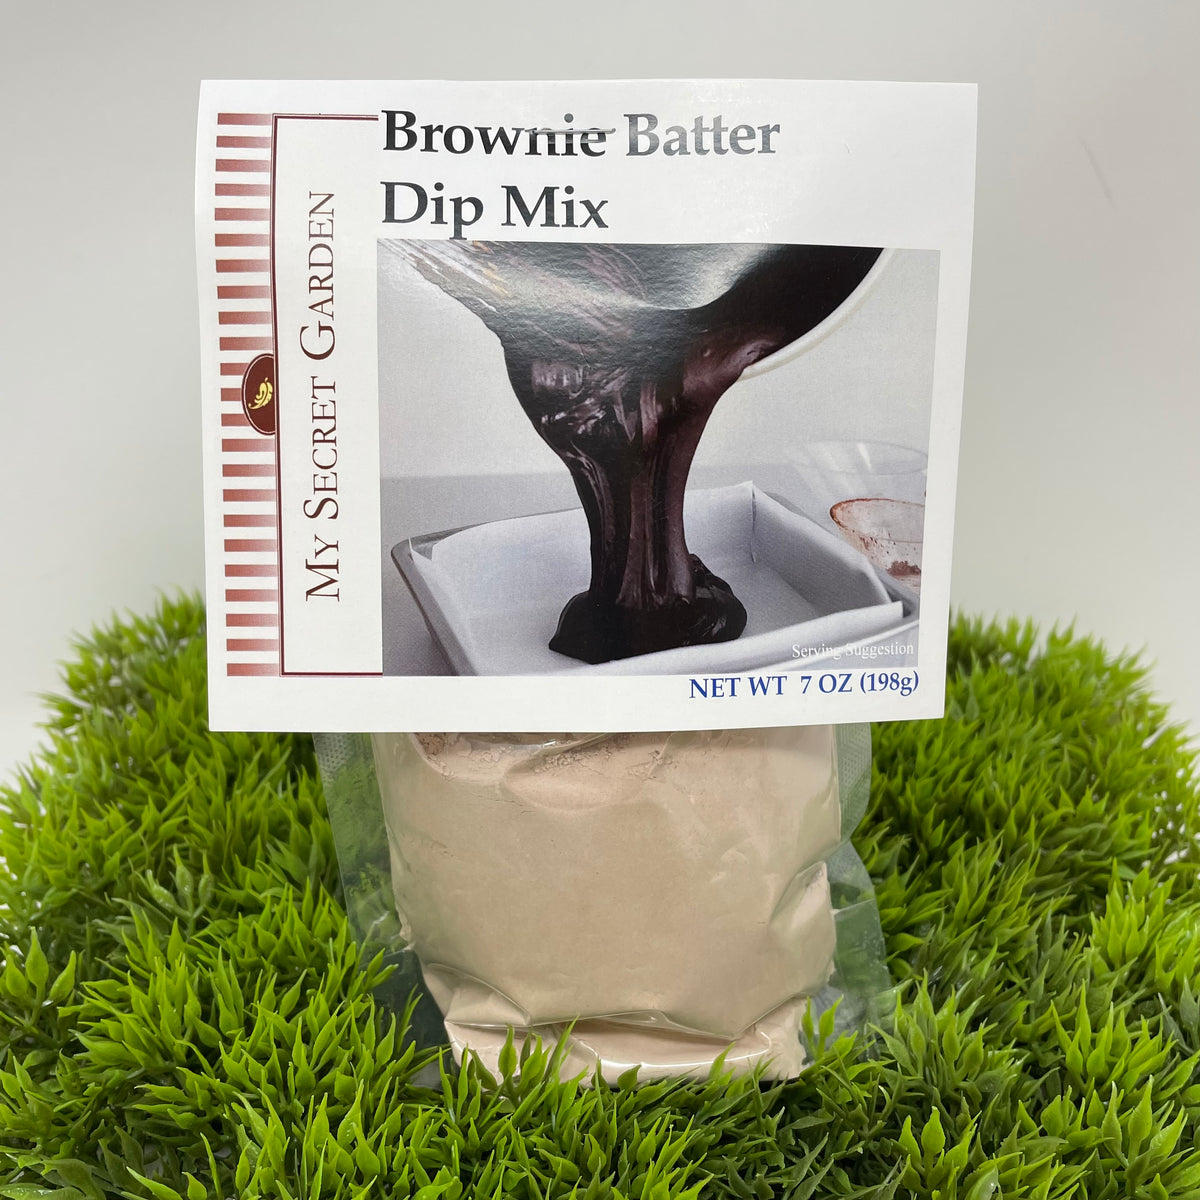 Brownie Batter Dip Mix